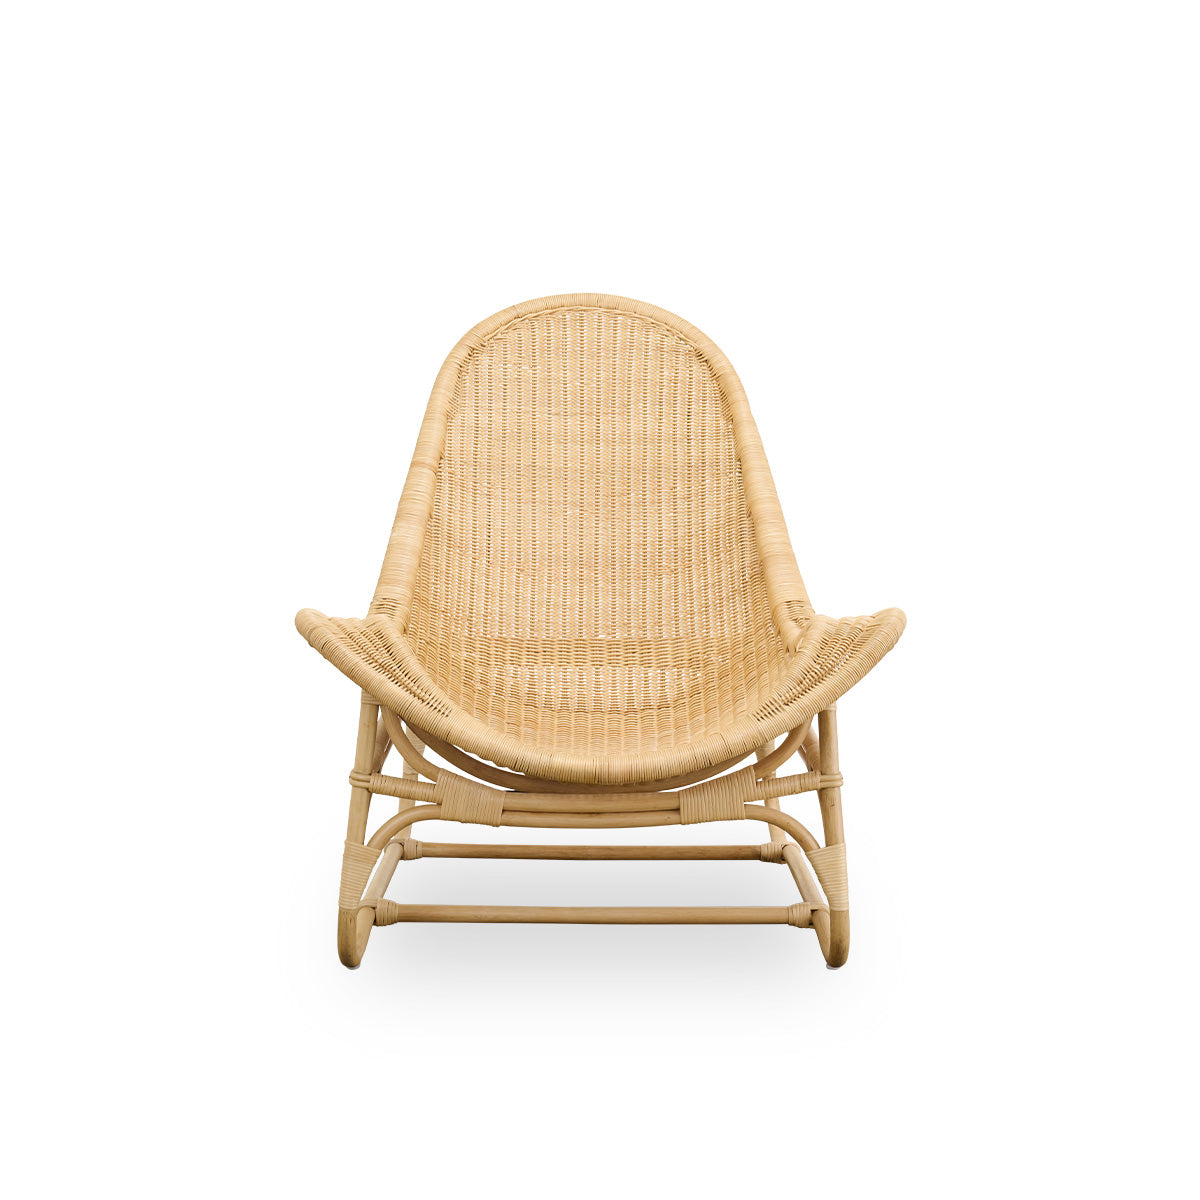 Vertrouwen Verward Lot Wicker chair | Michel Buffet | Pacifique Lounge Chair - Sika-Design.com